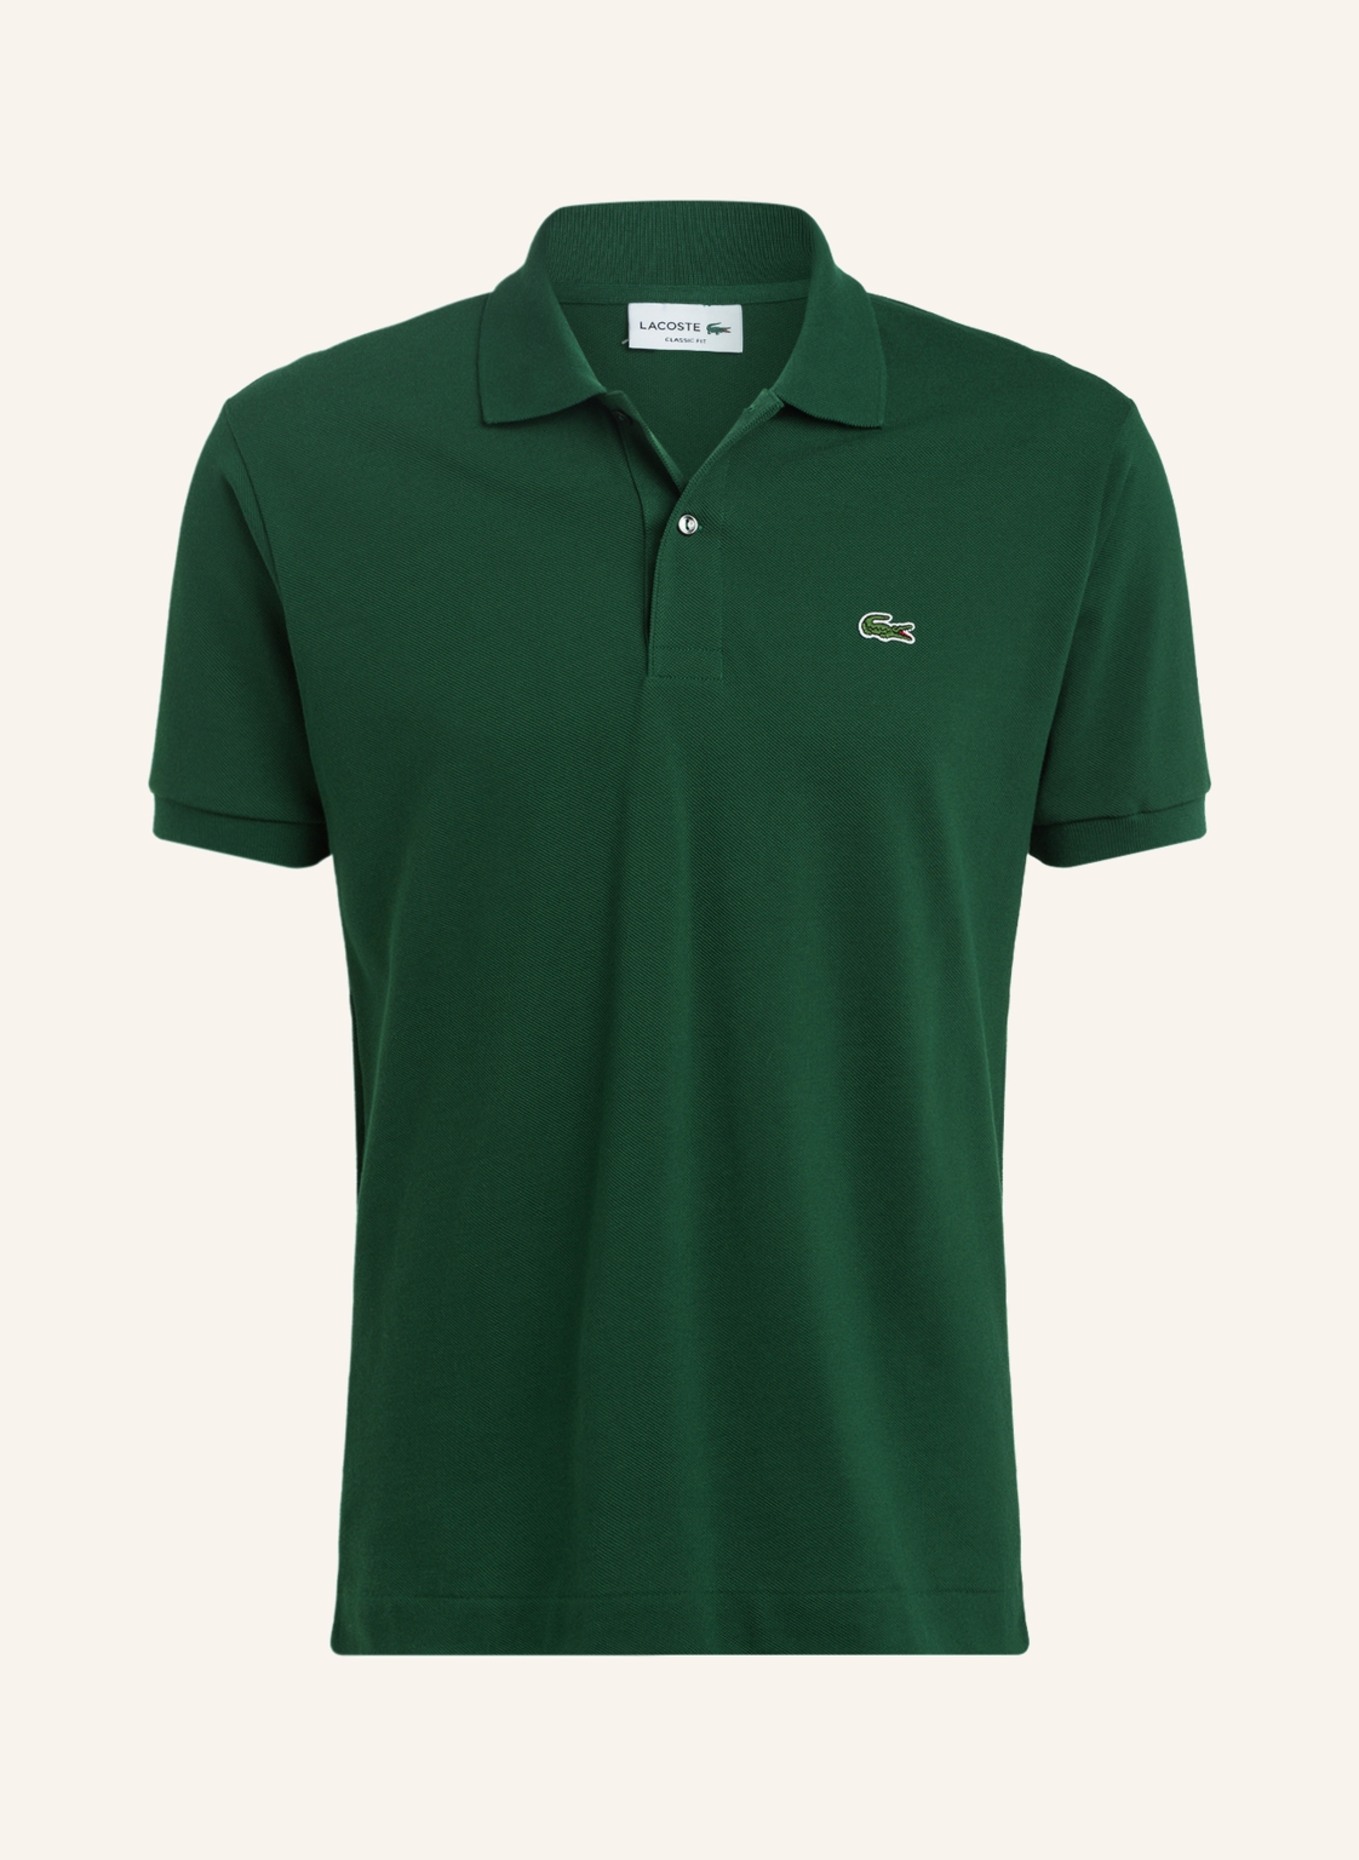 LACOSTE Piqué-Poloshirt Classic Fit, Farbe: GRÜN (Bild 1)